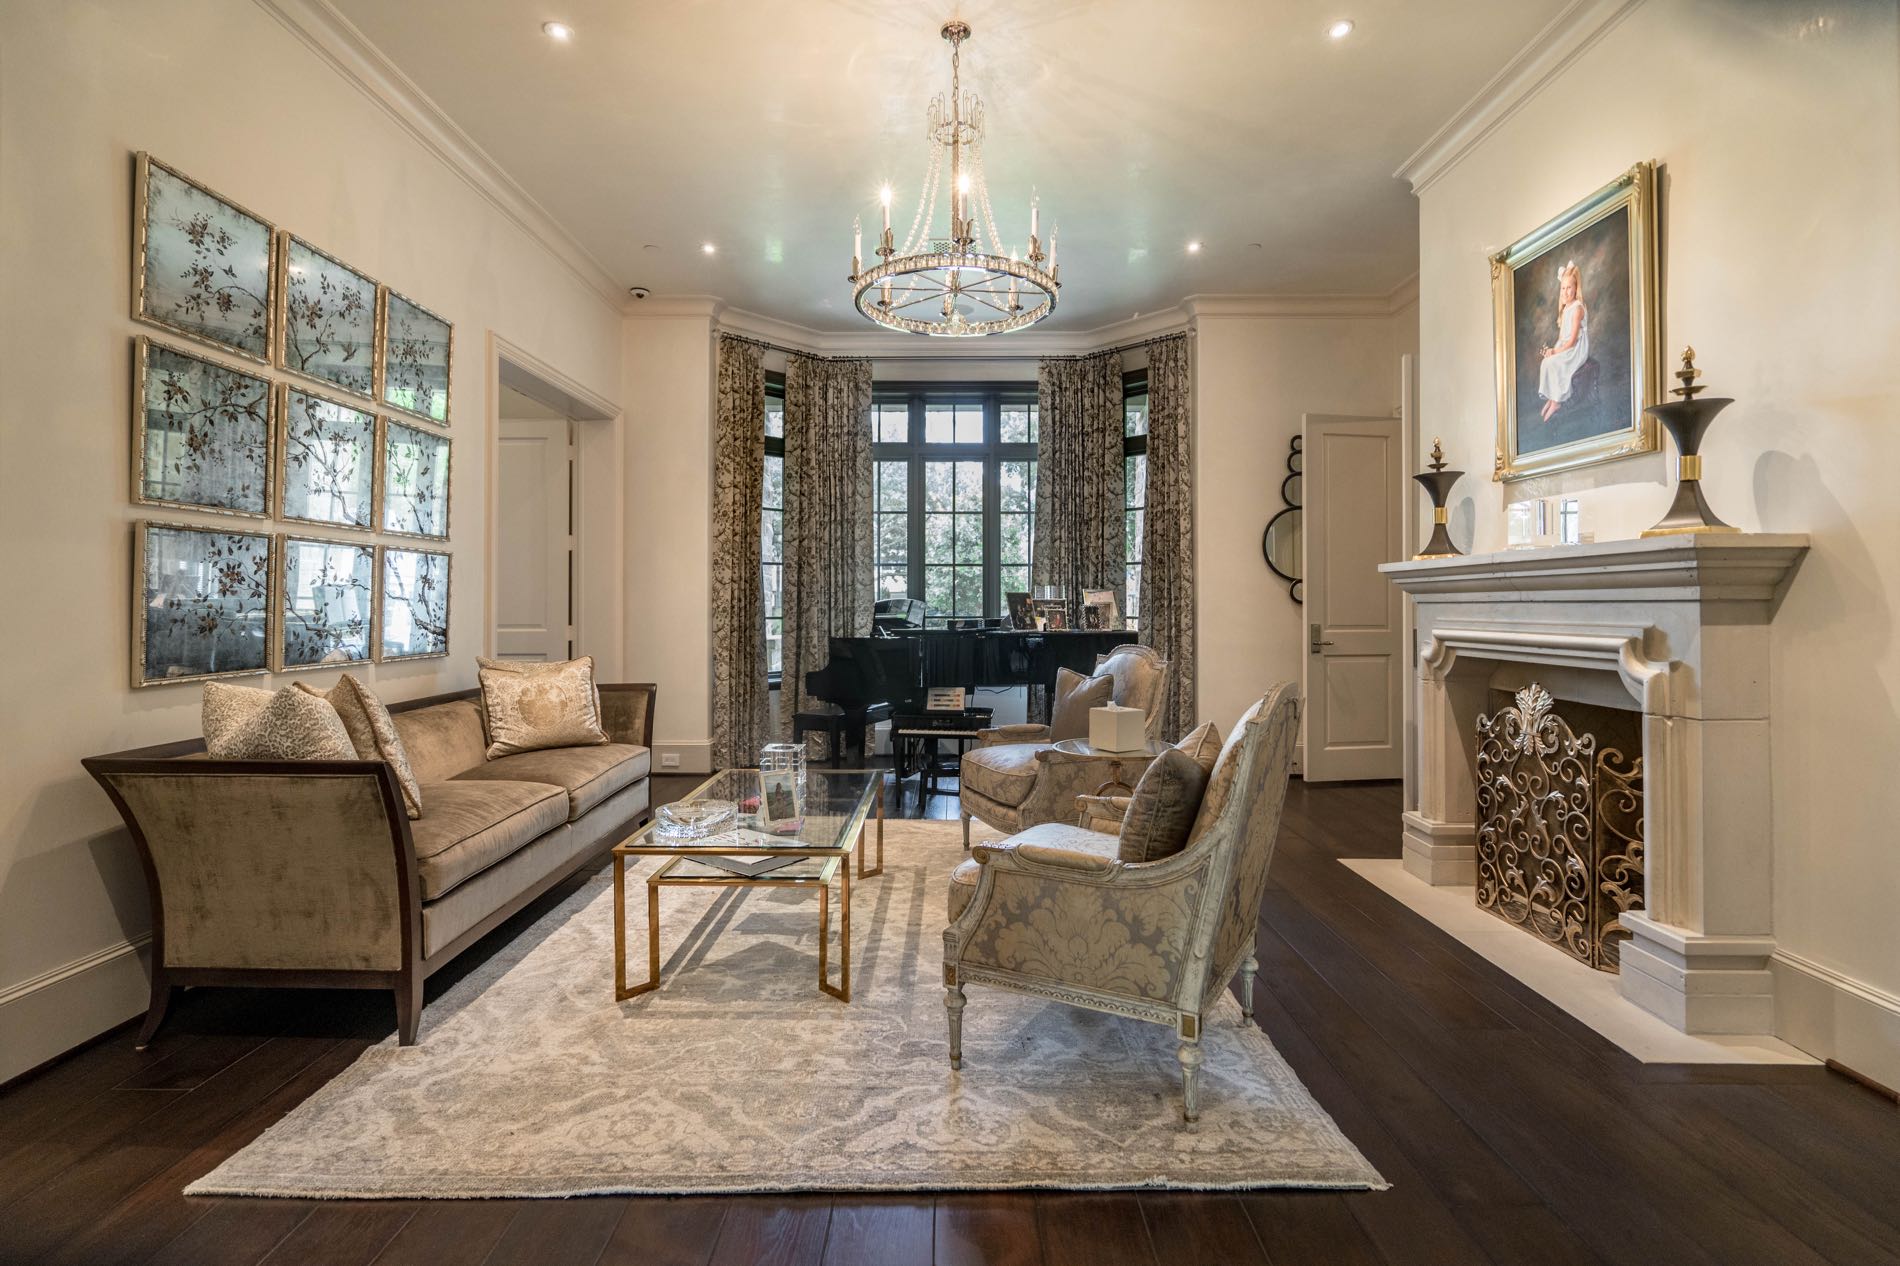 Interior Design For Living Rooms - Eklektik Interiors Houston Texas